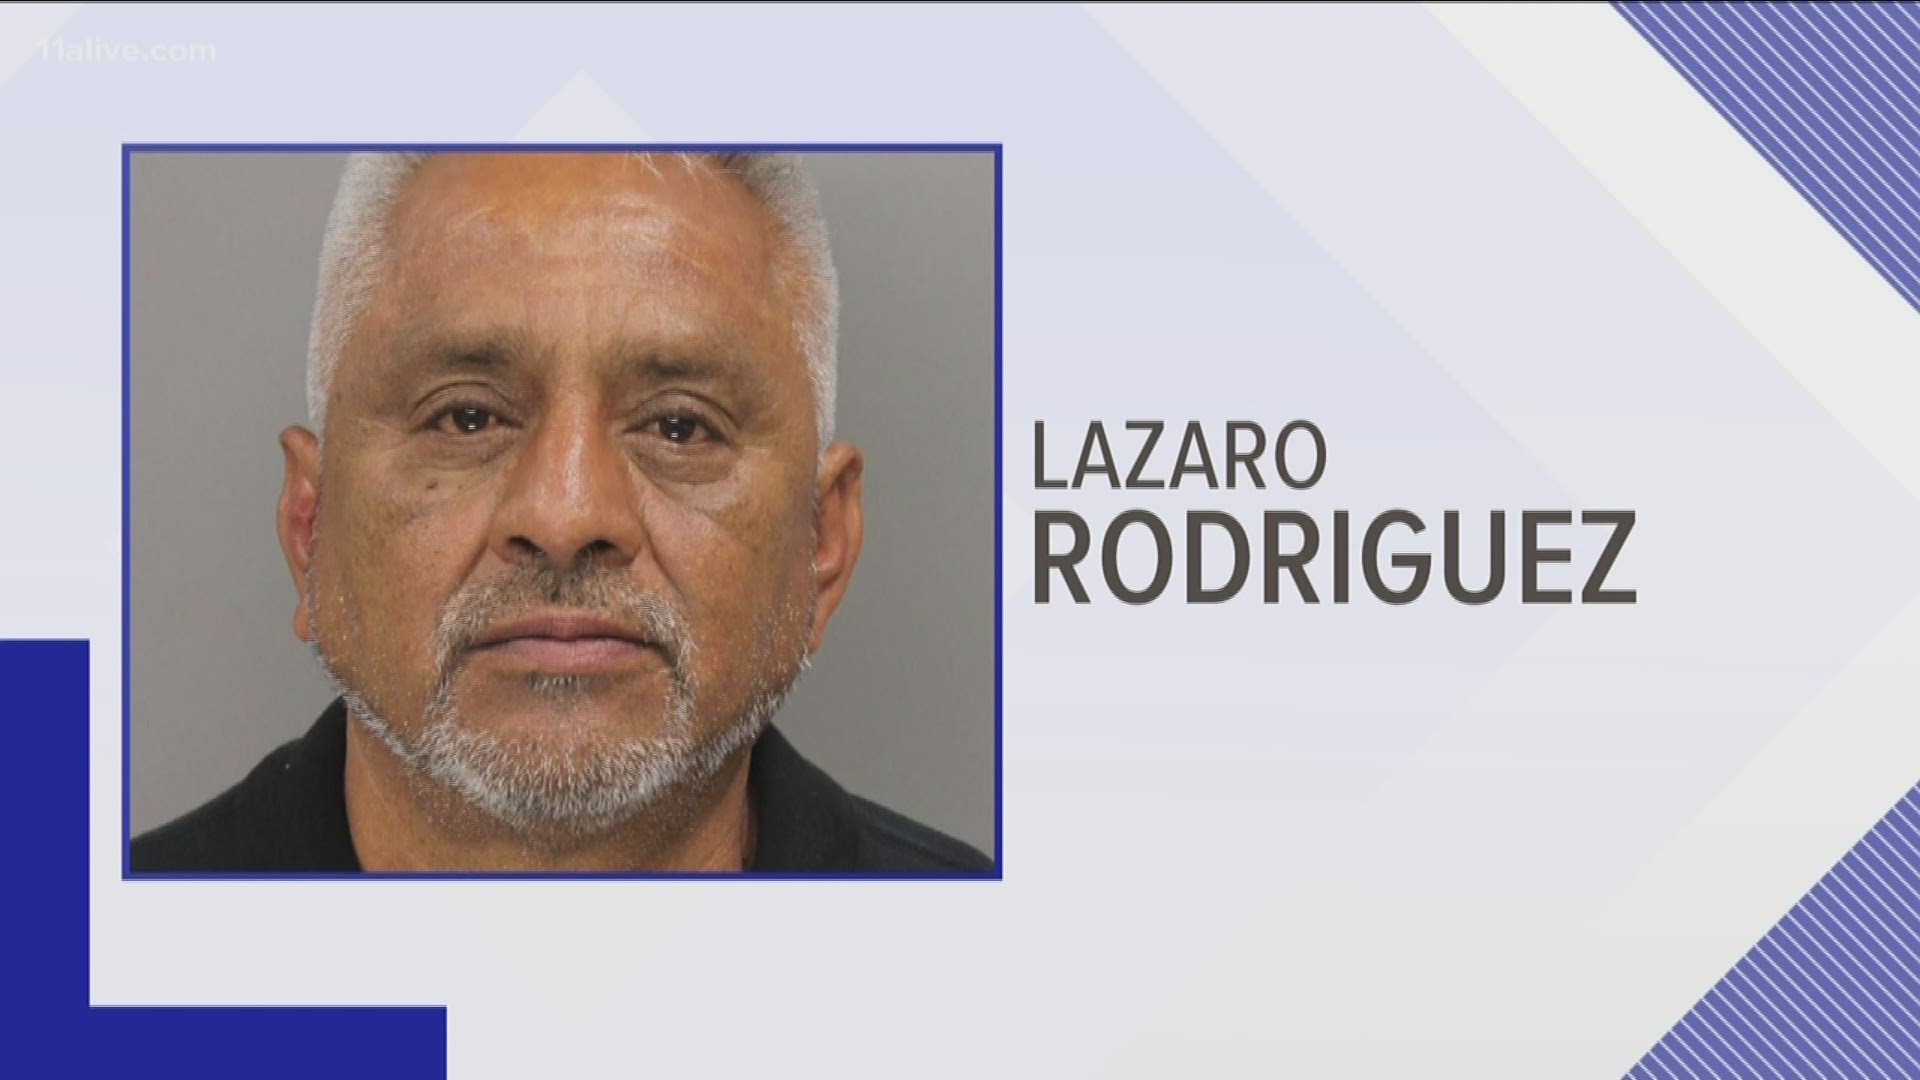 Lazaro Rodriguez of Lithia Springs surrendered to authorities around 7:30 p.m. Saturday.